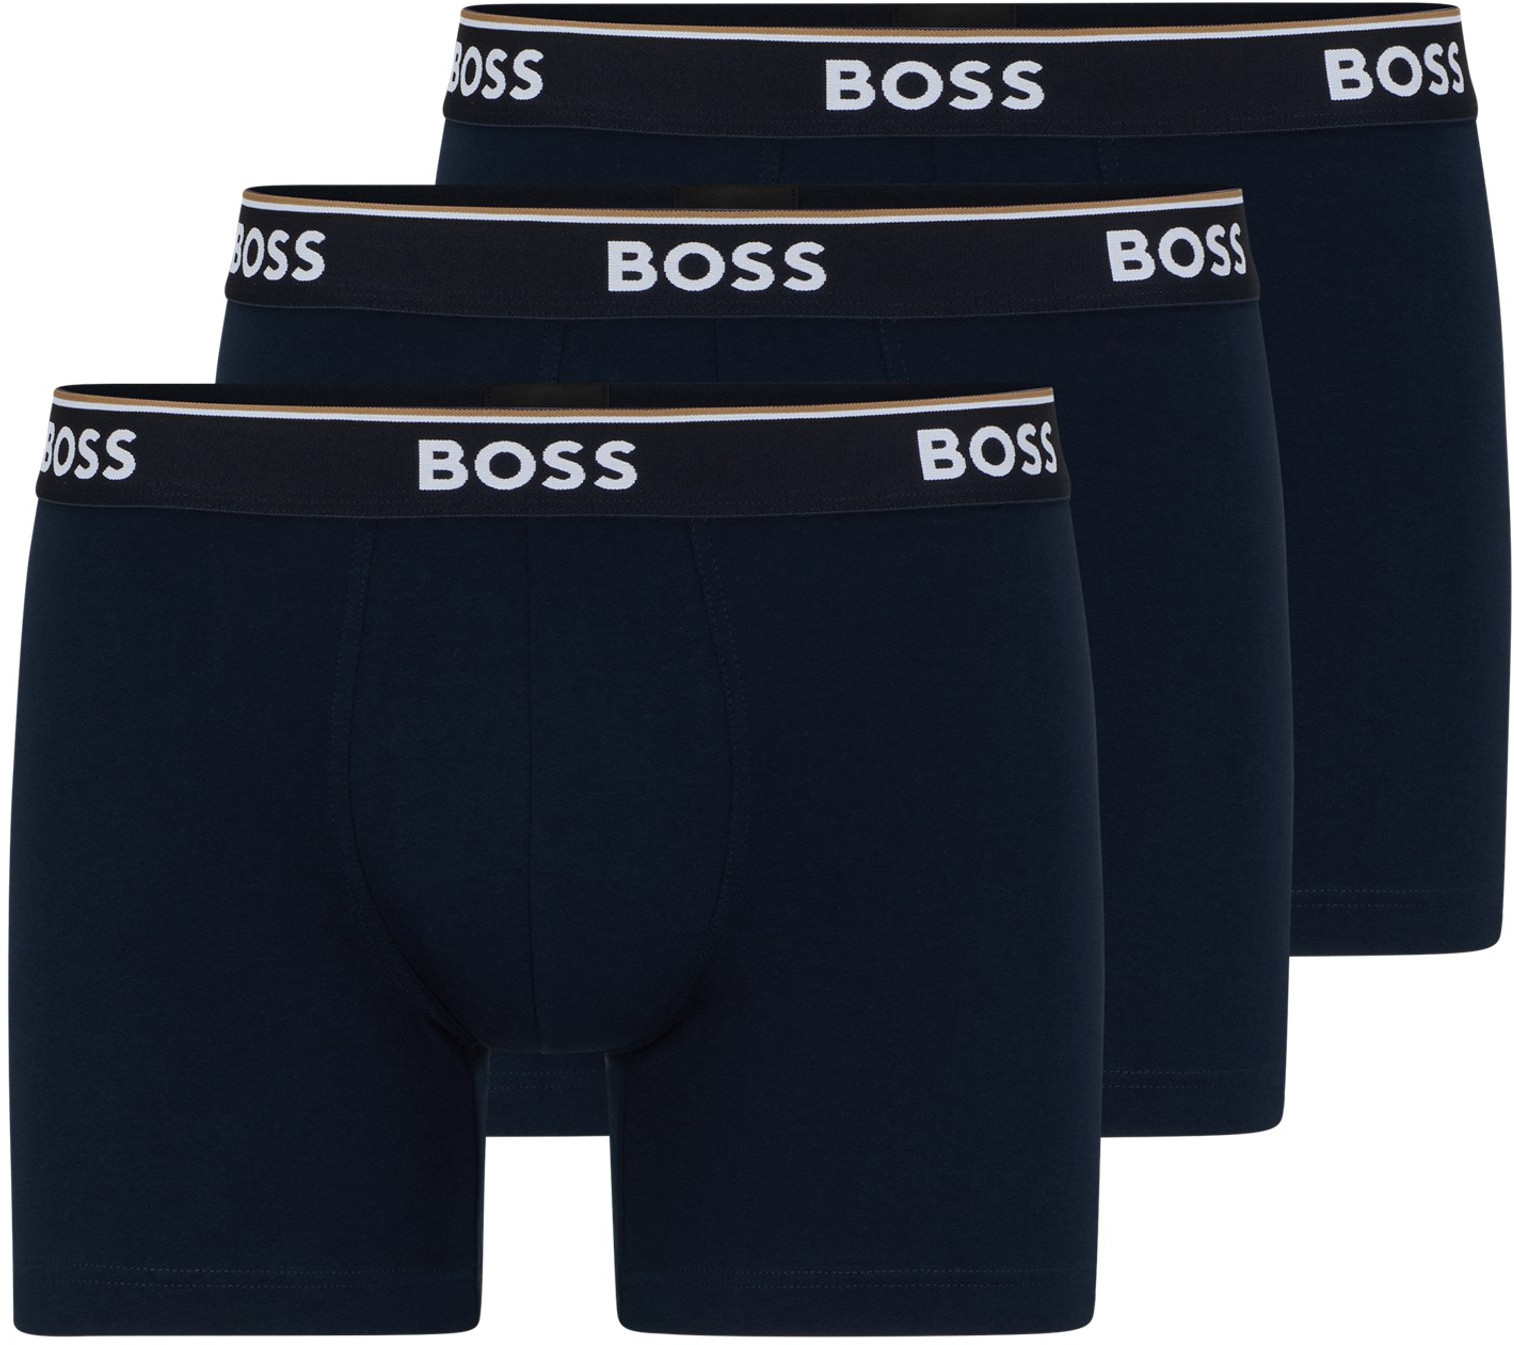 Hugo Boss 3 PACK - pánské boxerky BOSS 50475282-480 XXL